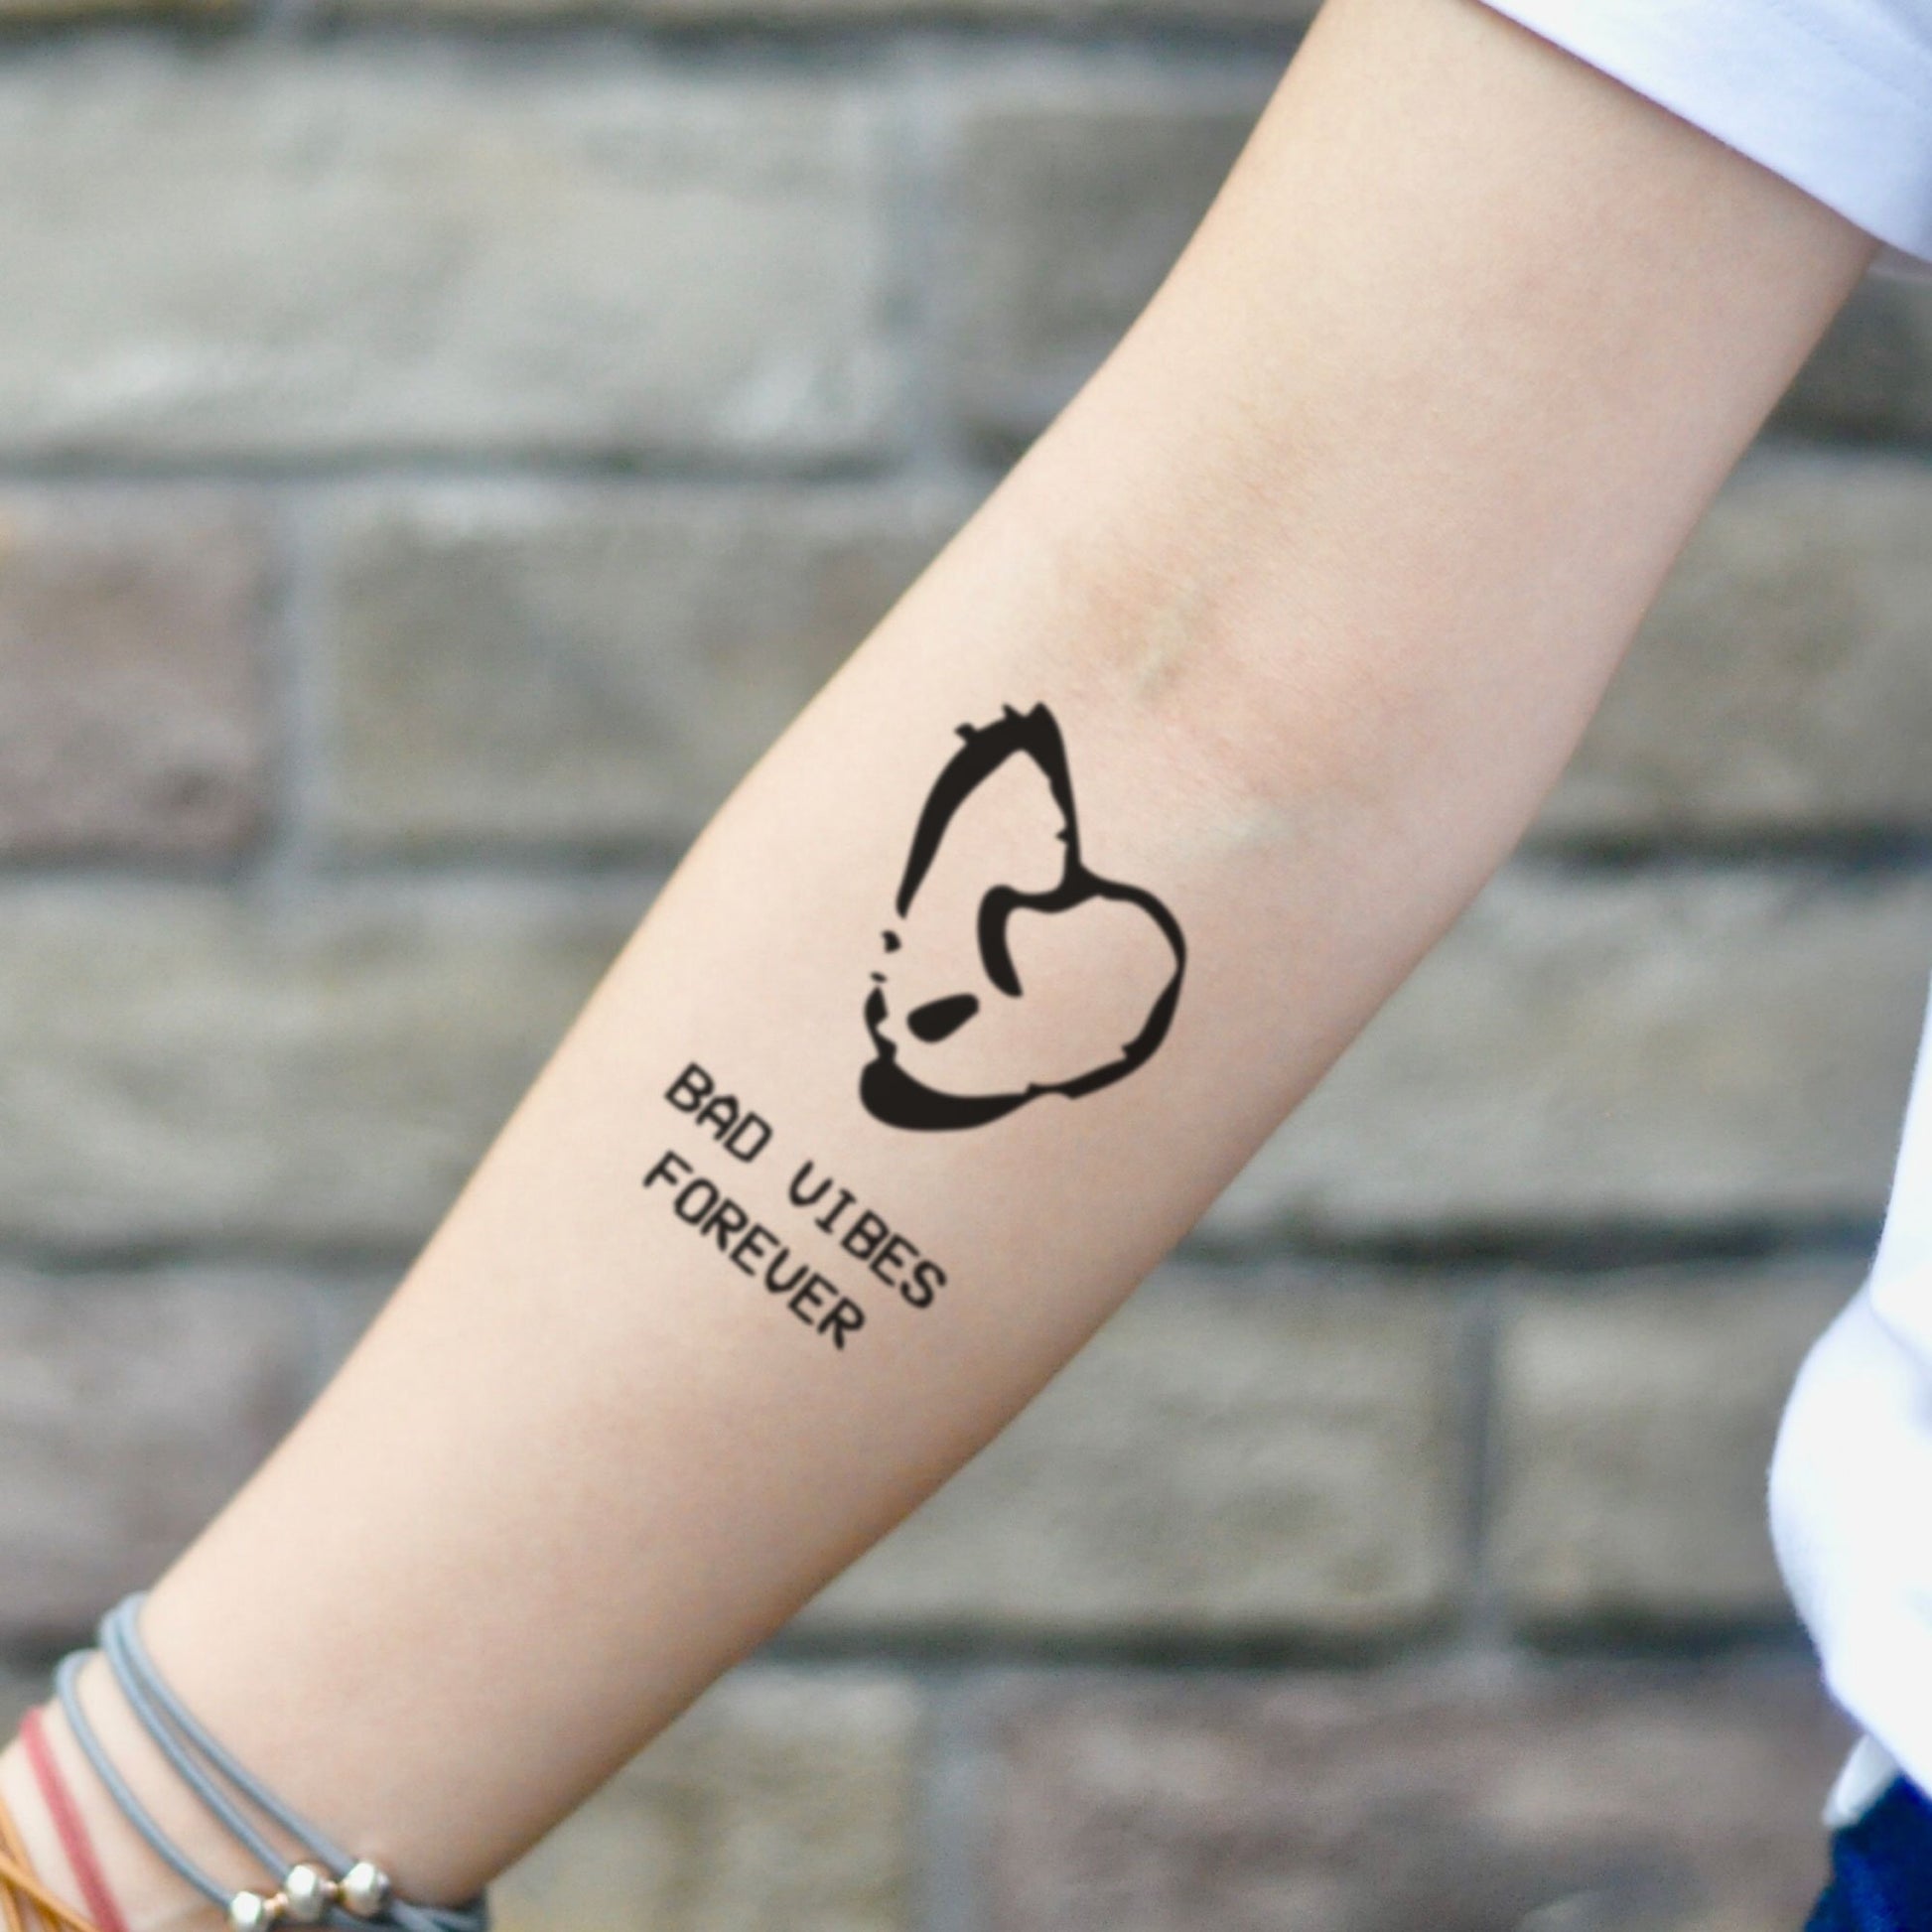 fake small bad vibes forever illustrative temporary tattoo sticker design idea on inner arm